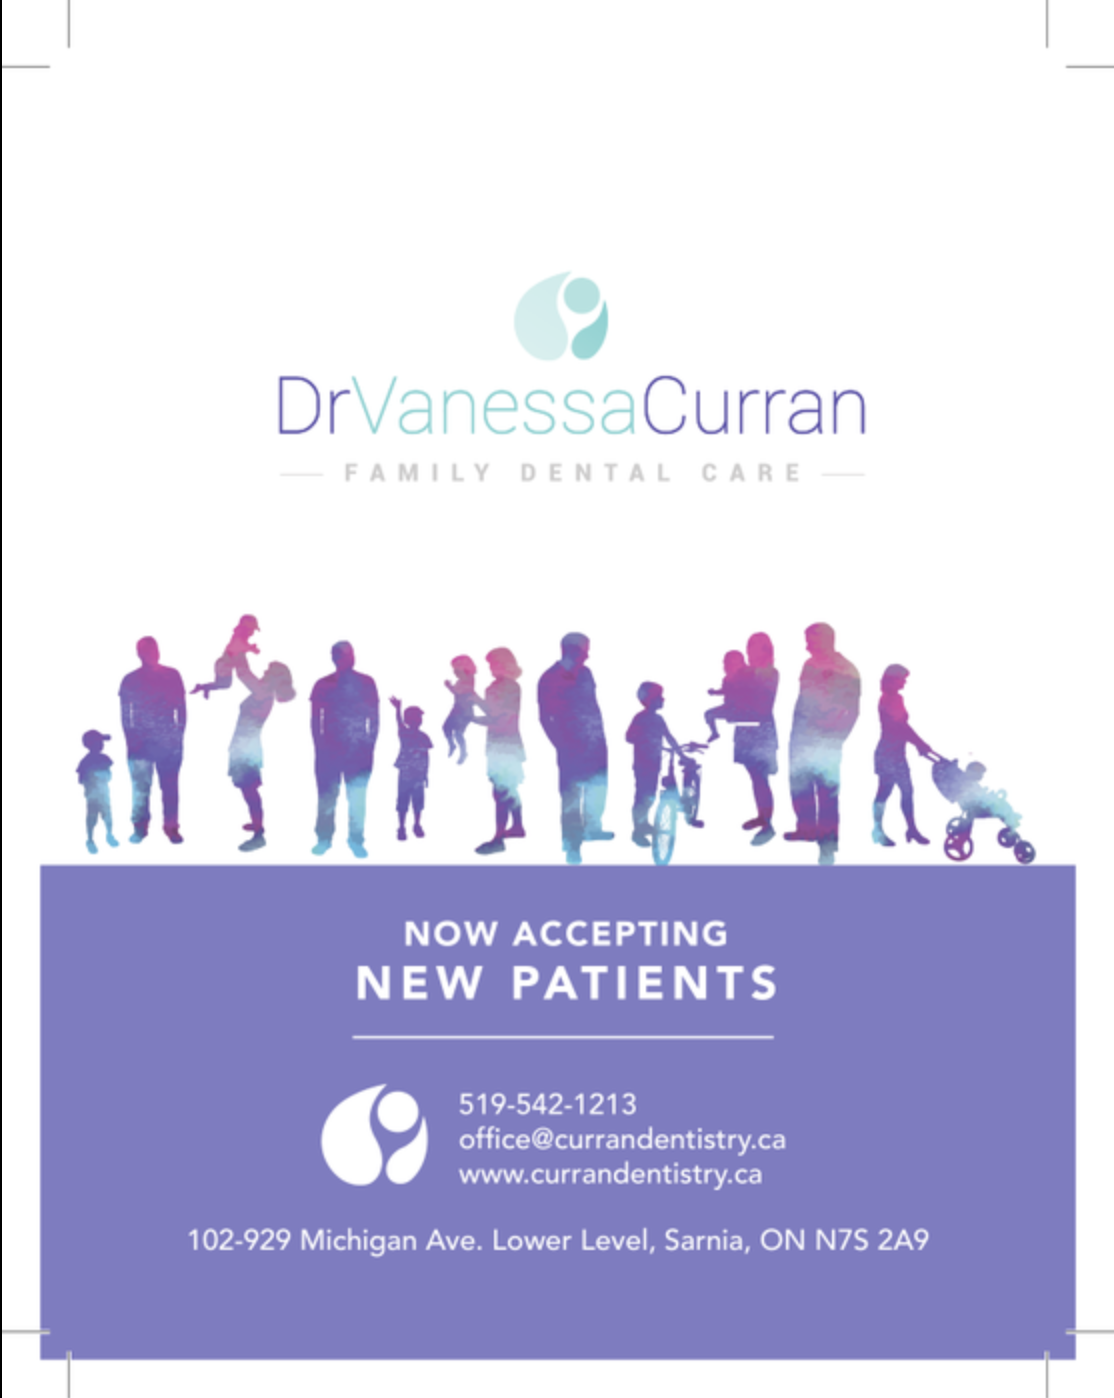 Dr. Curran Family Dental Care